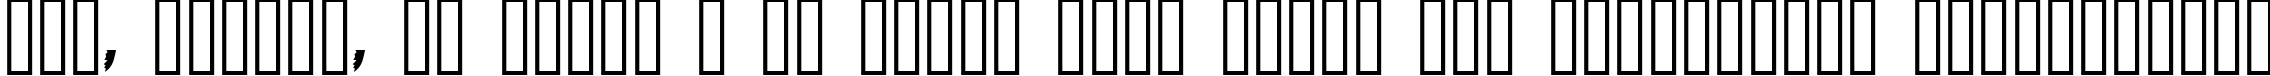 Пример написания шрифтом Knuckle Sandwich Classic Italic текста на украинском